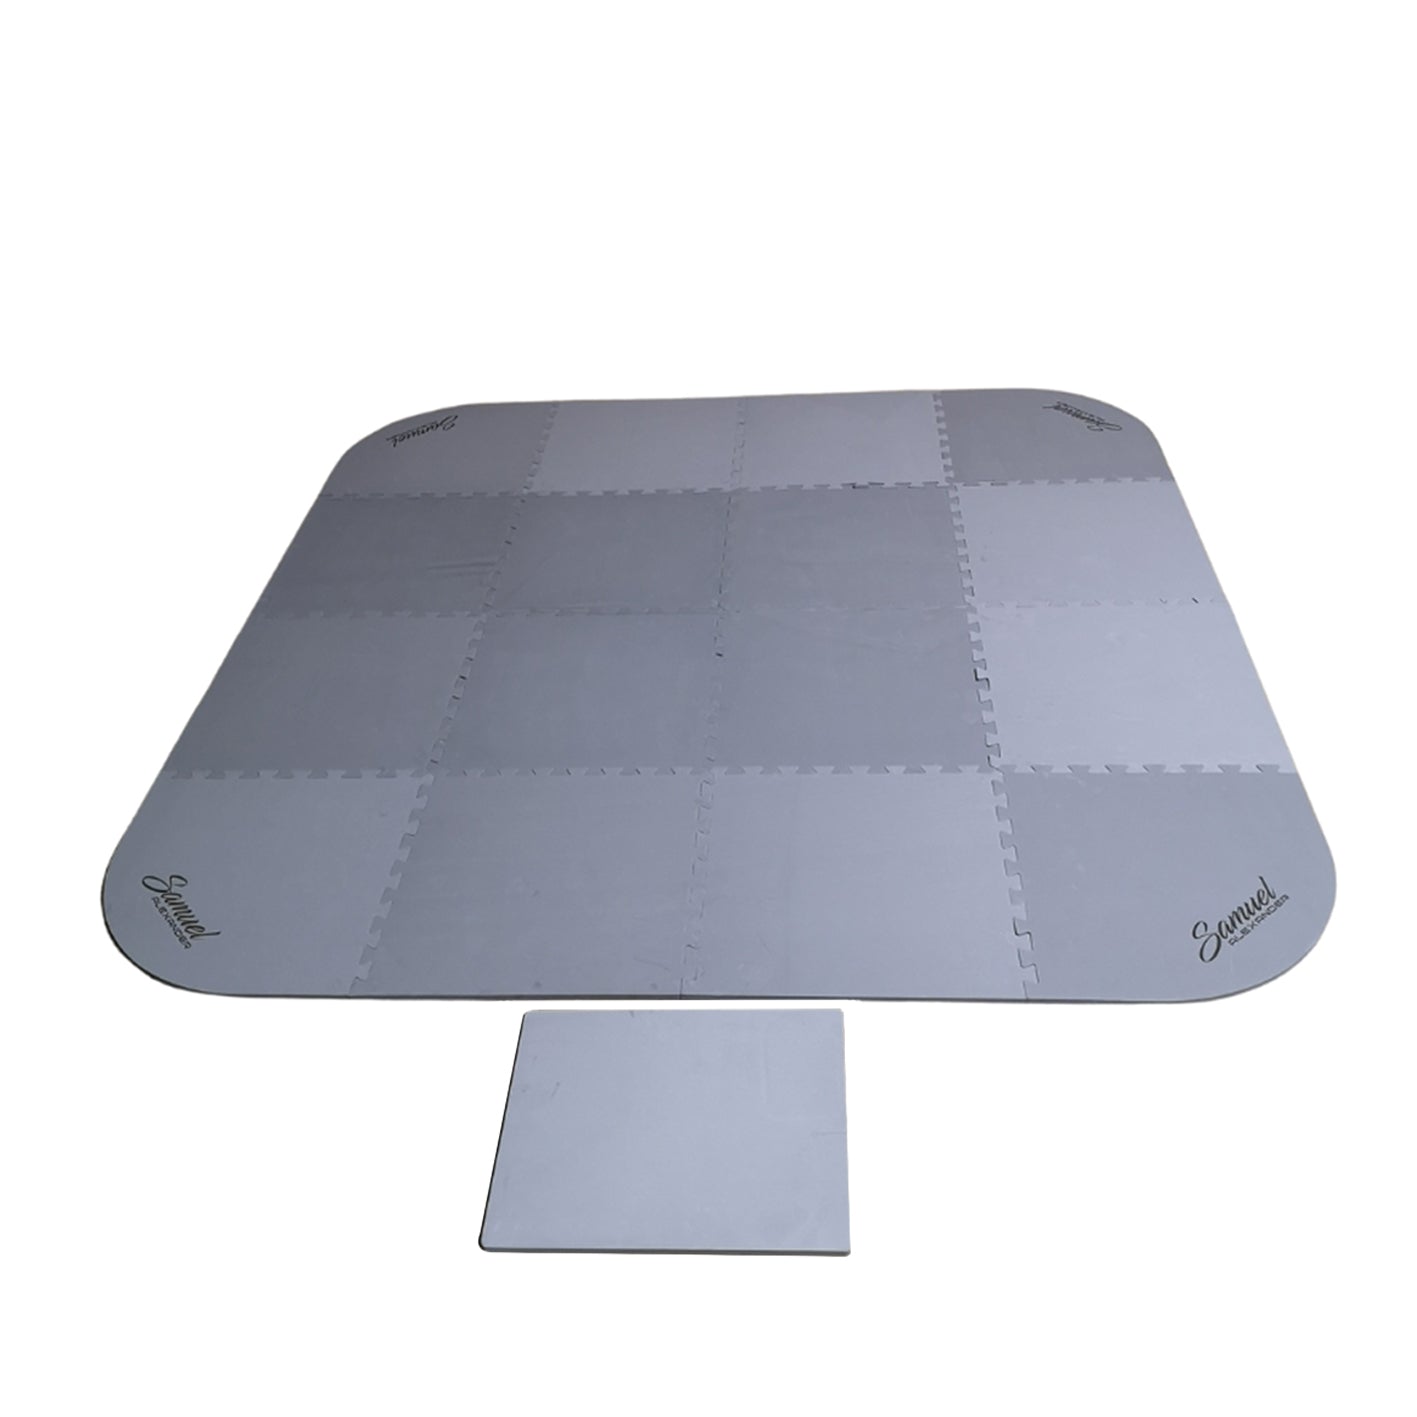 12mm x 216cm Grey Foam Spa Hot Tub Floor Thermal Protector Mat Accessory